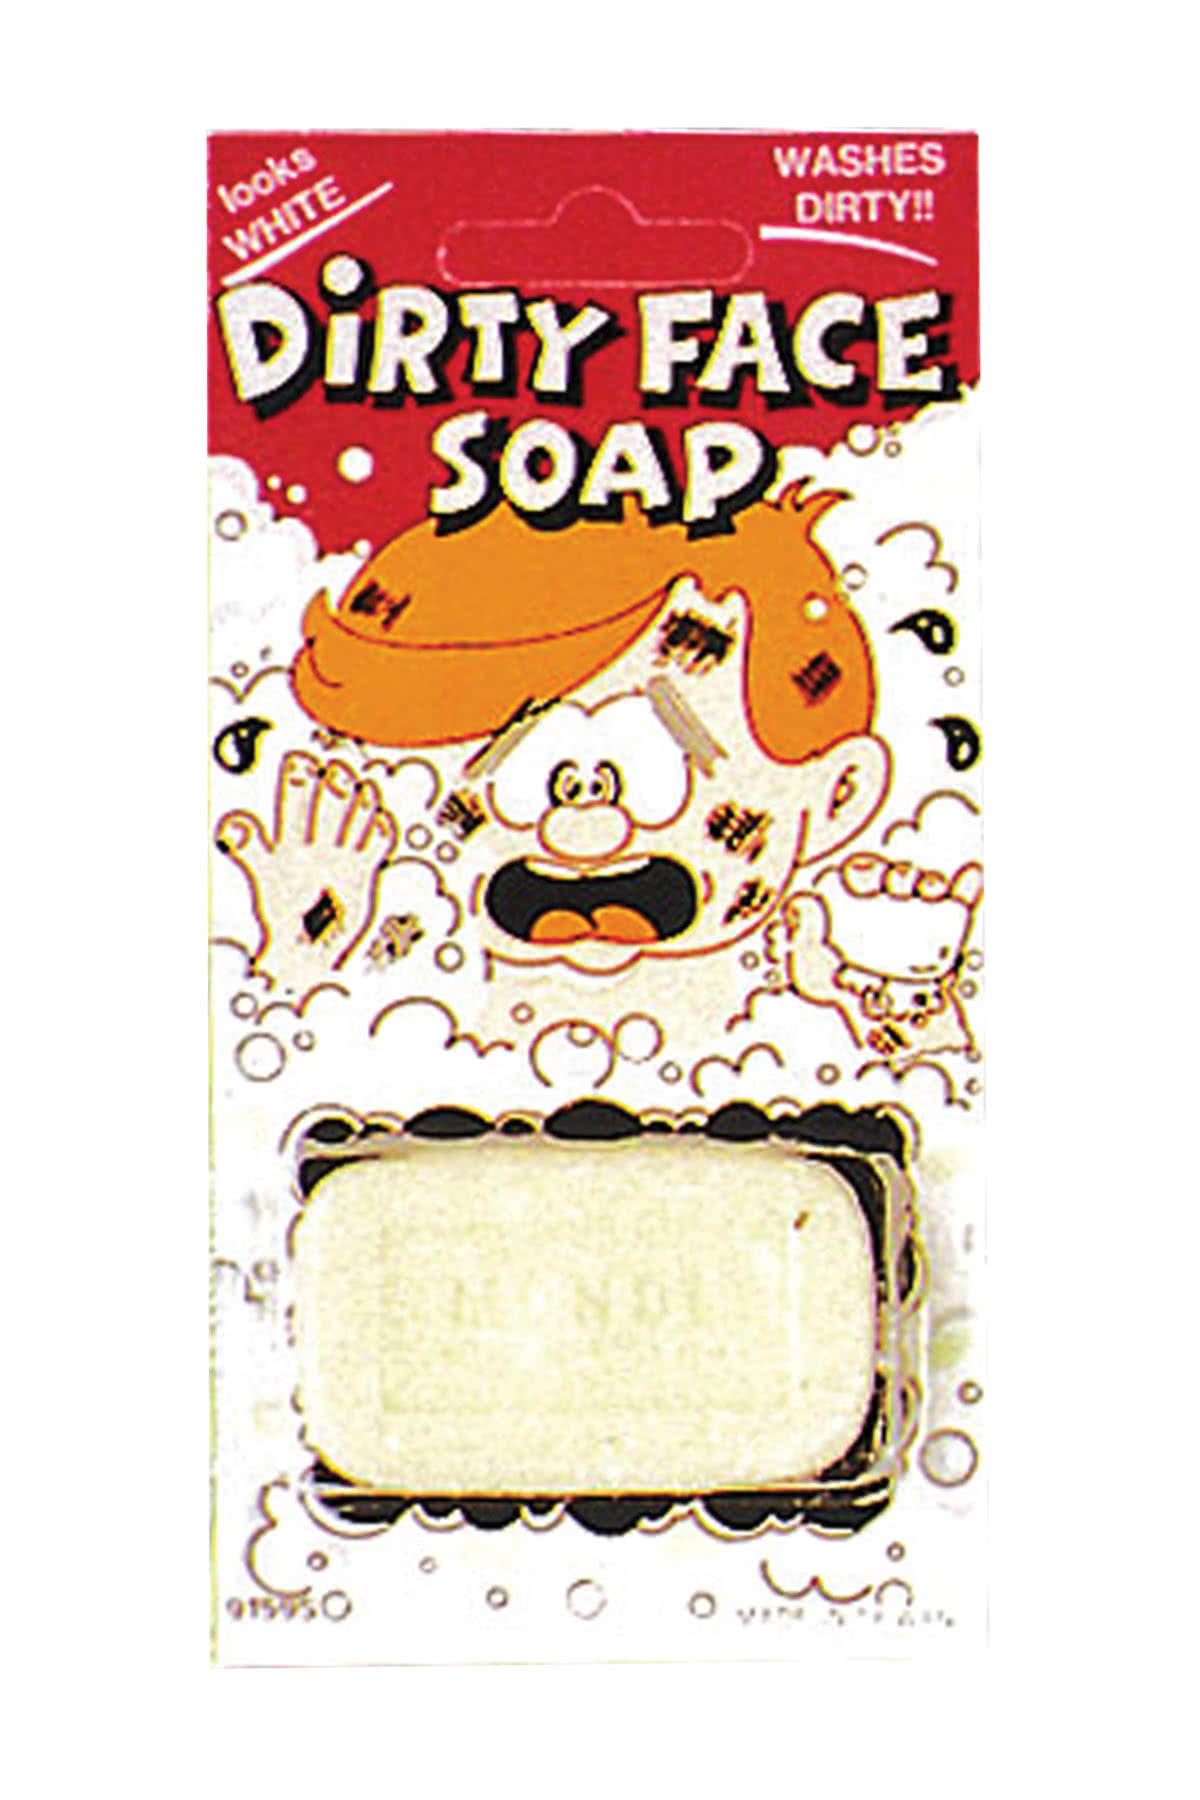 Dirty Soap as a joke article & April Fool's joke 